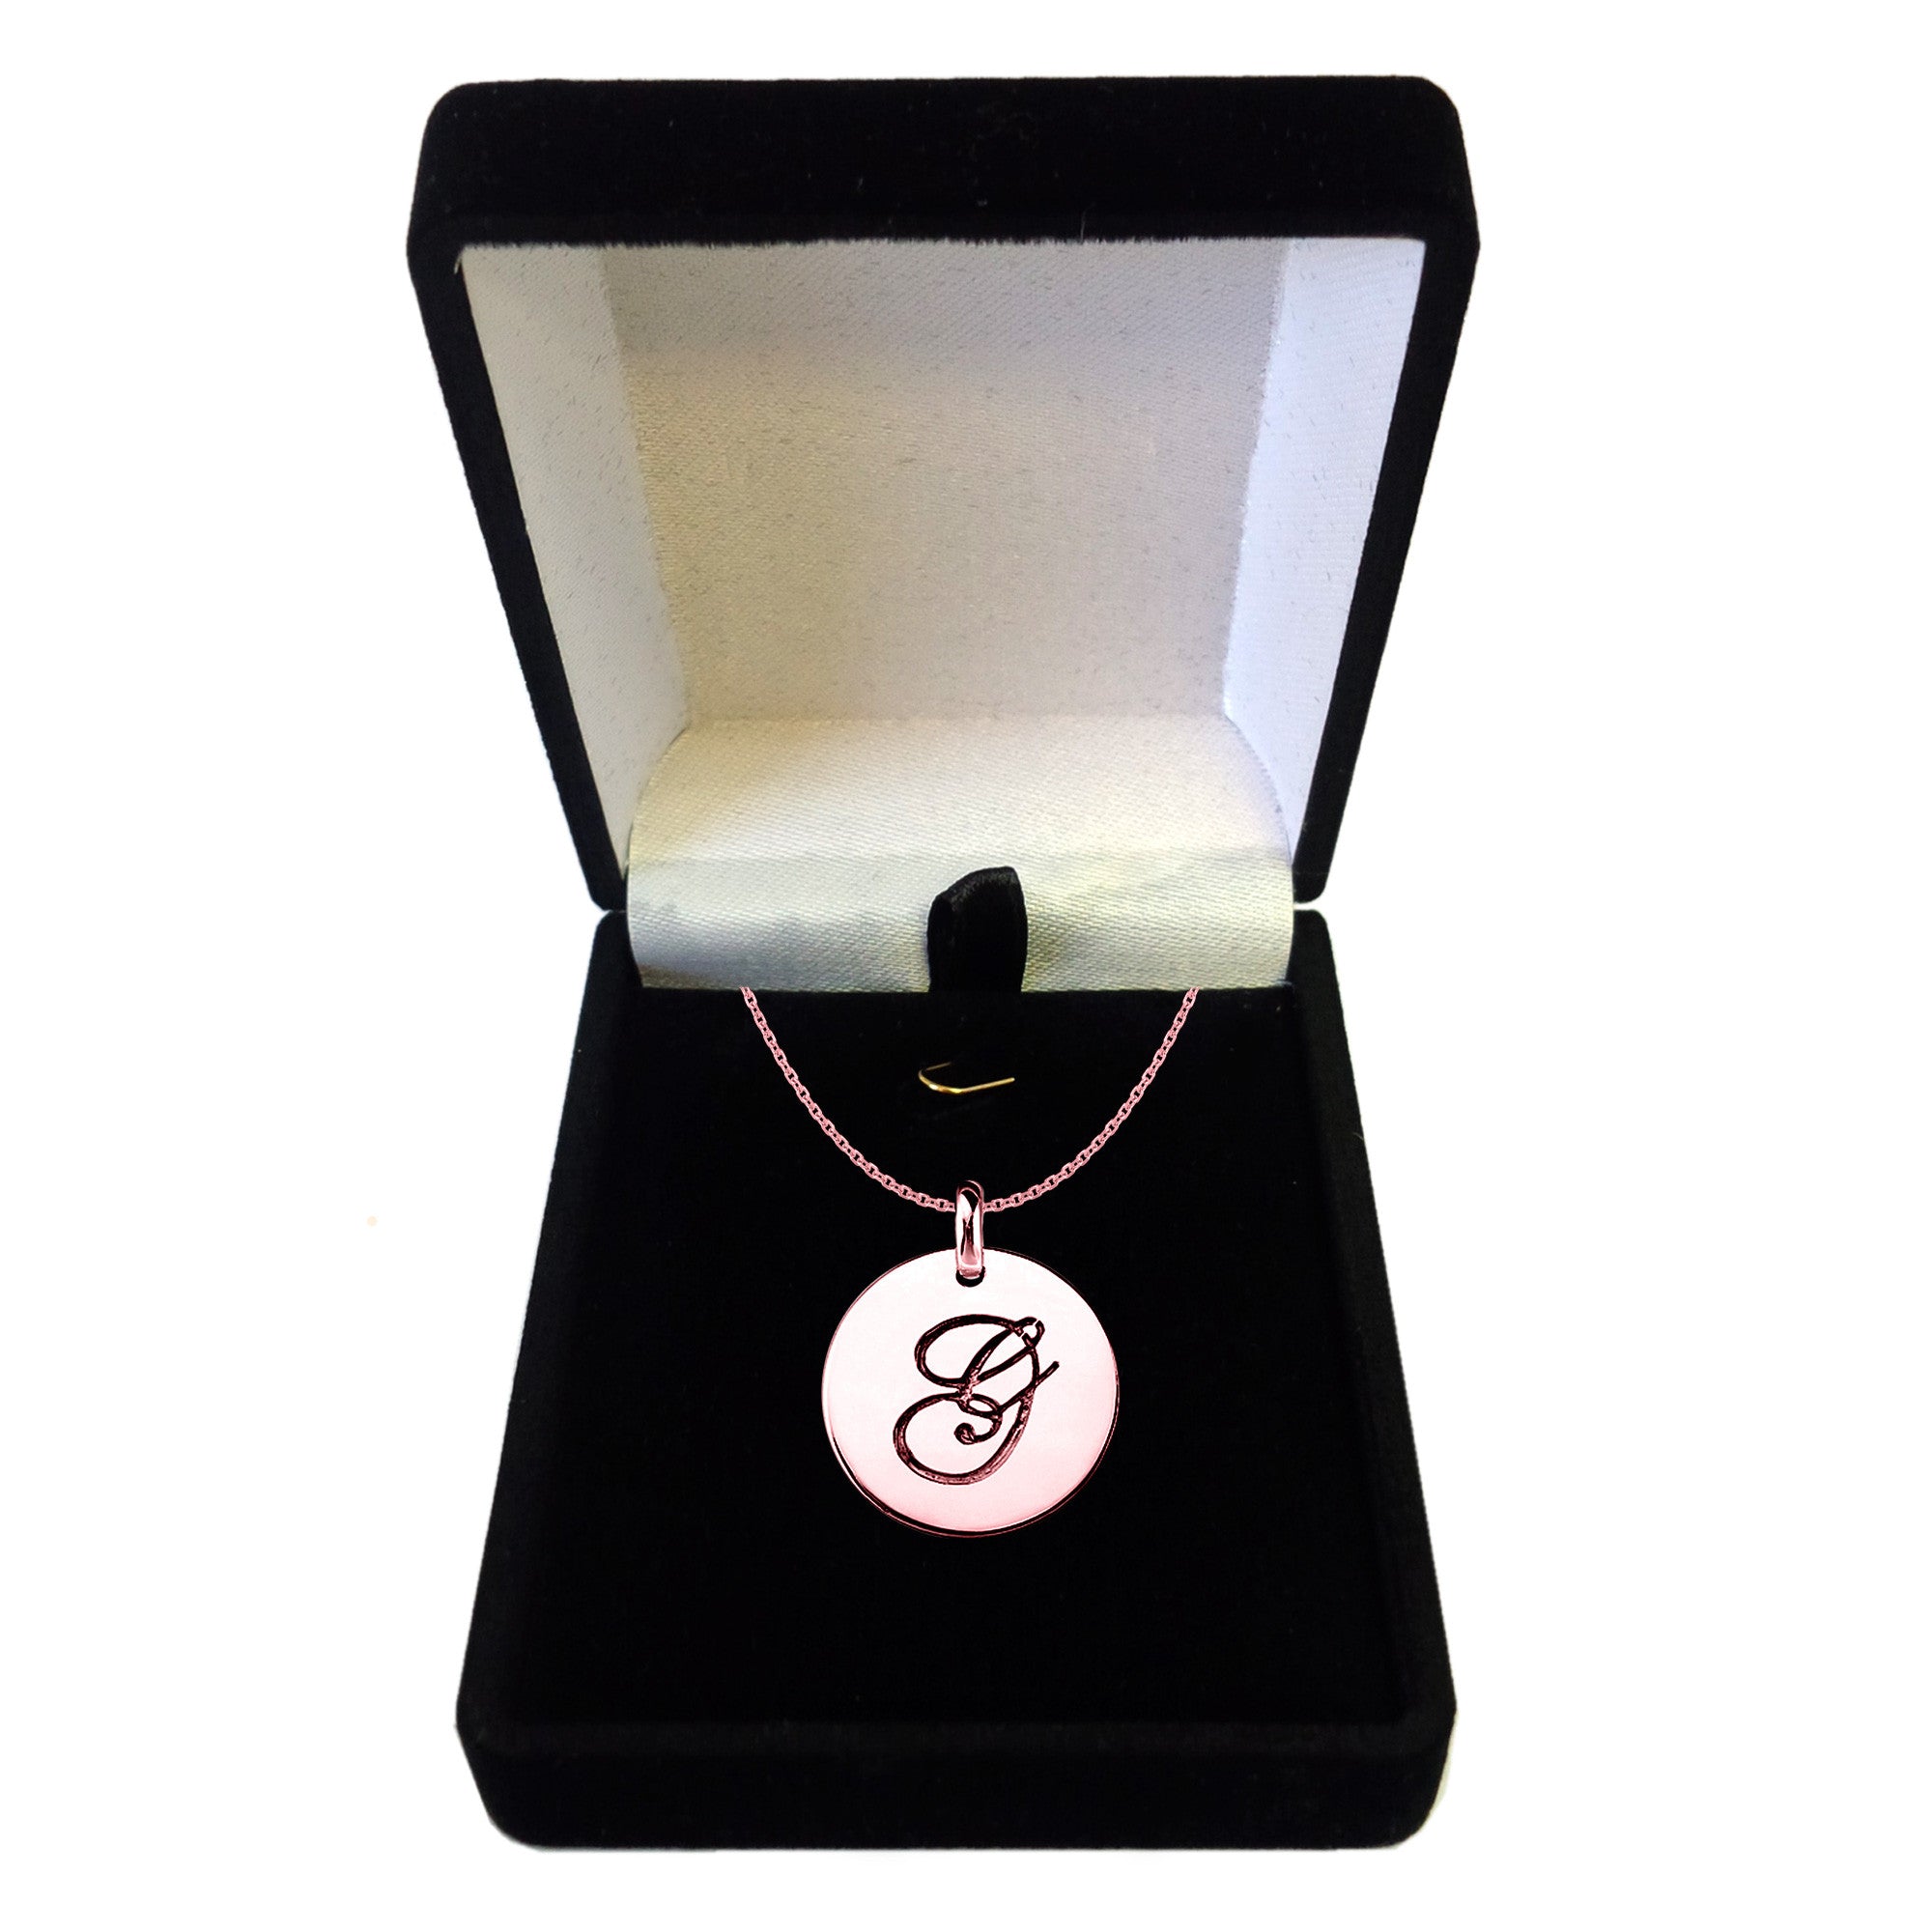 "G" 14K Rose Gold Script Engraved Initial Disk Pendant fine designer jewelry for men and women